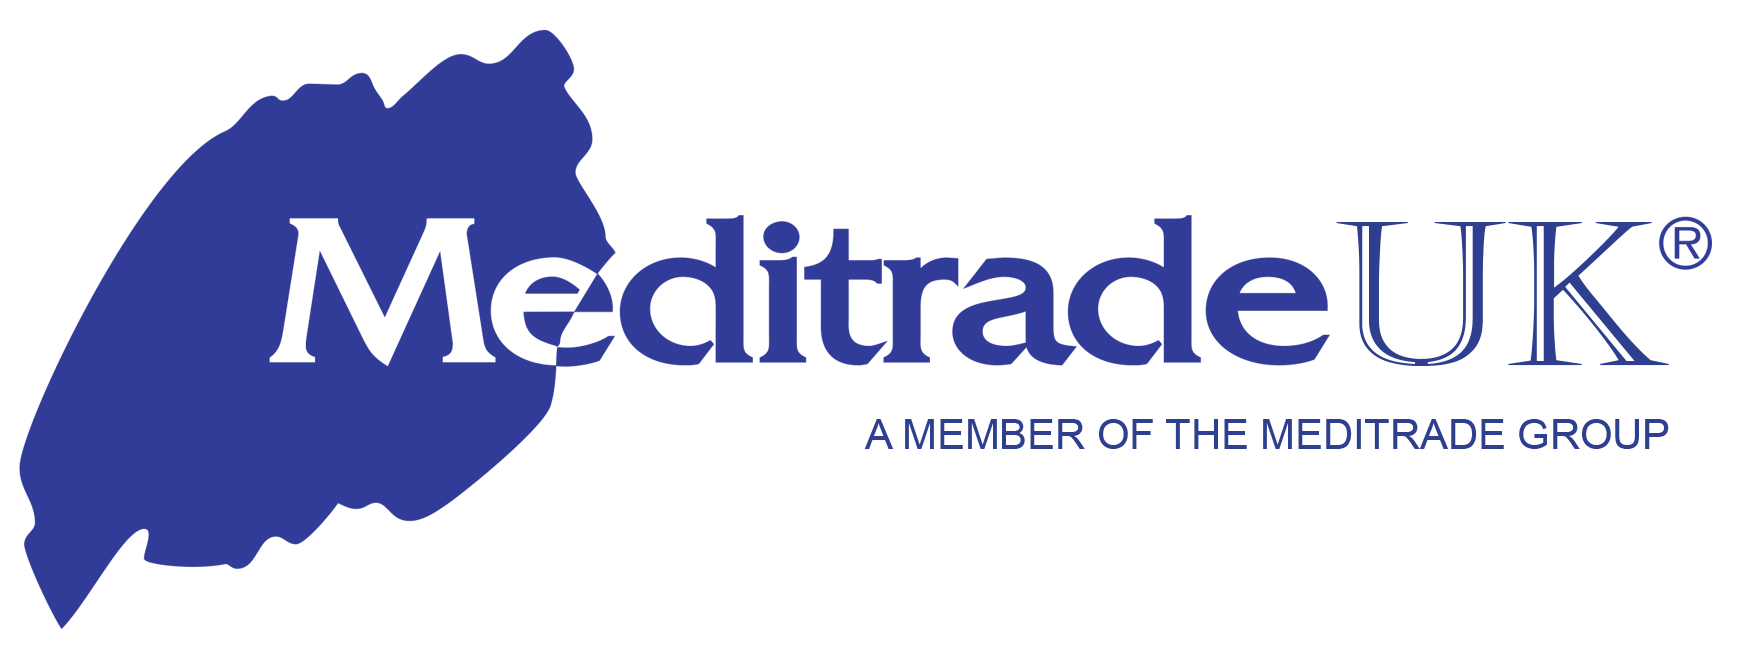 00 Meditrade UK Logo Main No Background